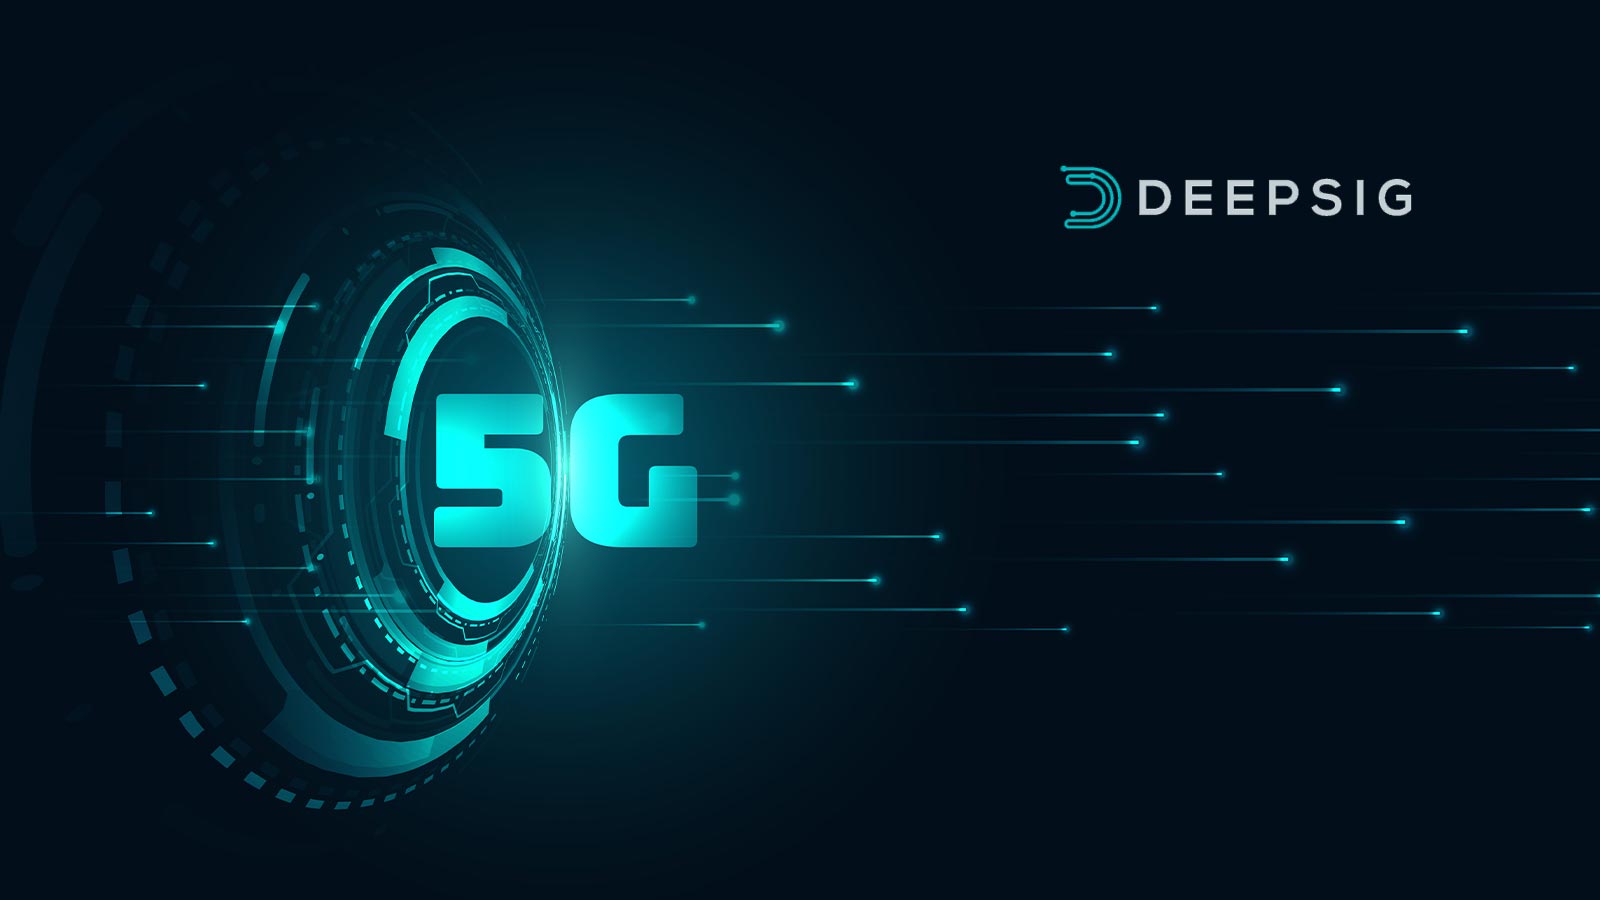 DeepSig to Participate in Telco AI World Summit in Berlin